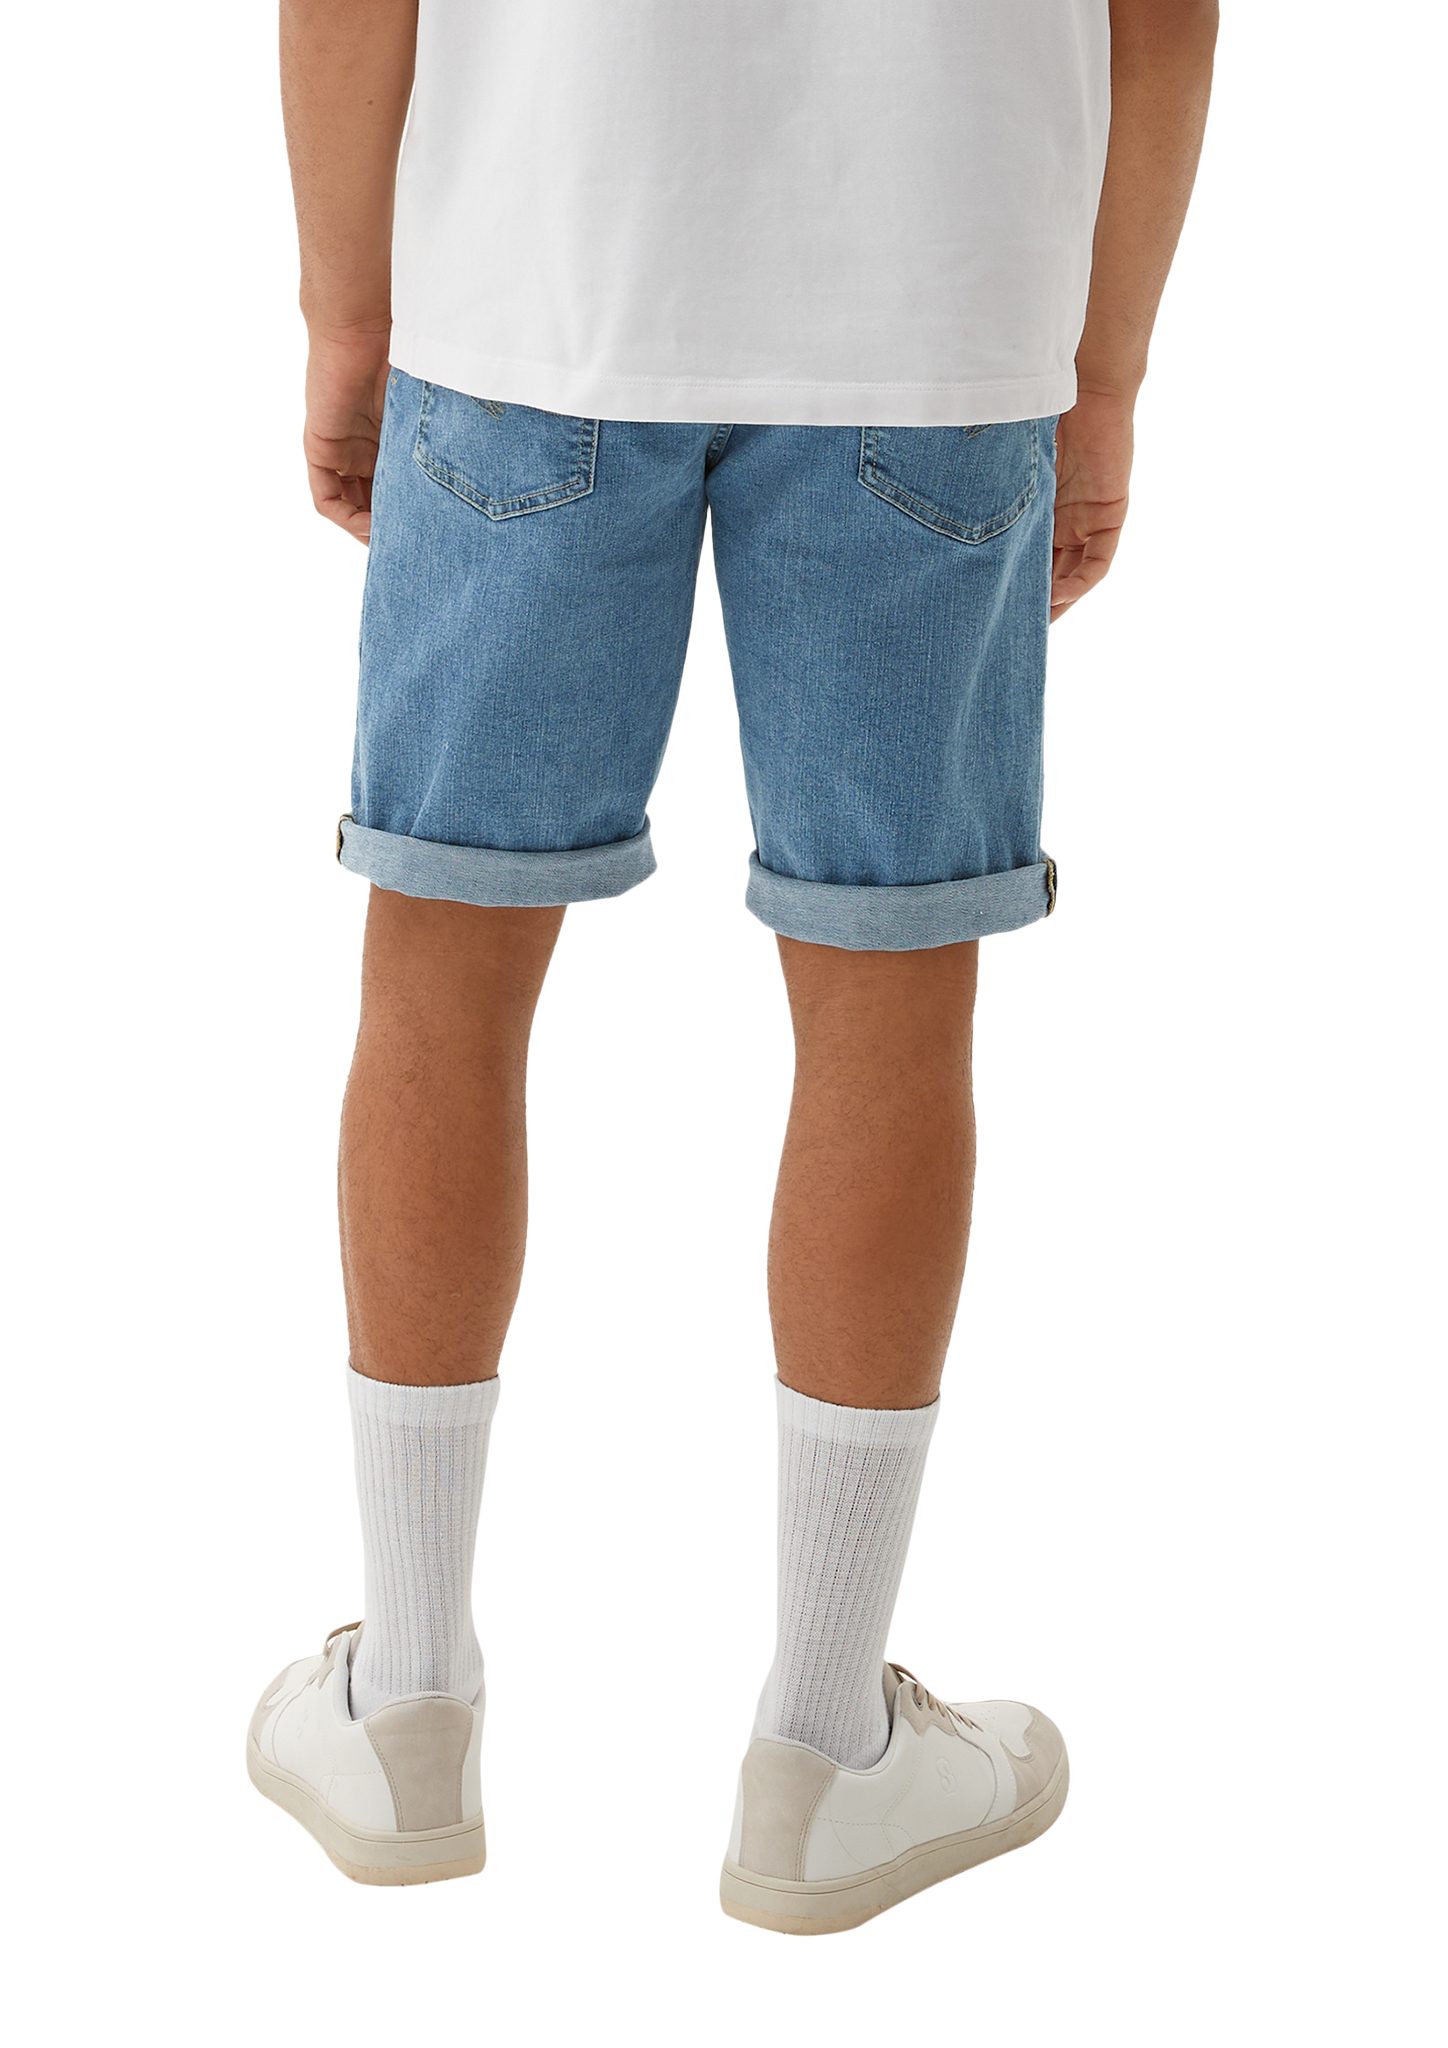 John / Straight Fit himmelblau Waschung QS Jeans-Bermuda Rise / / Mid Leg Jeansshorts Regular